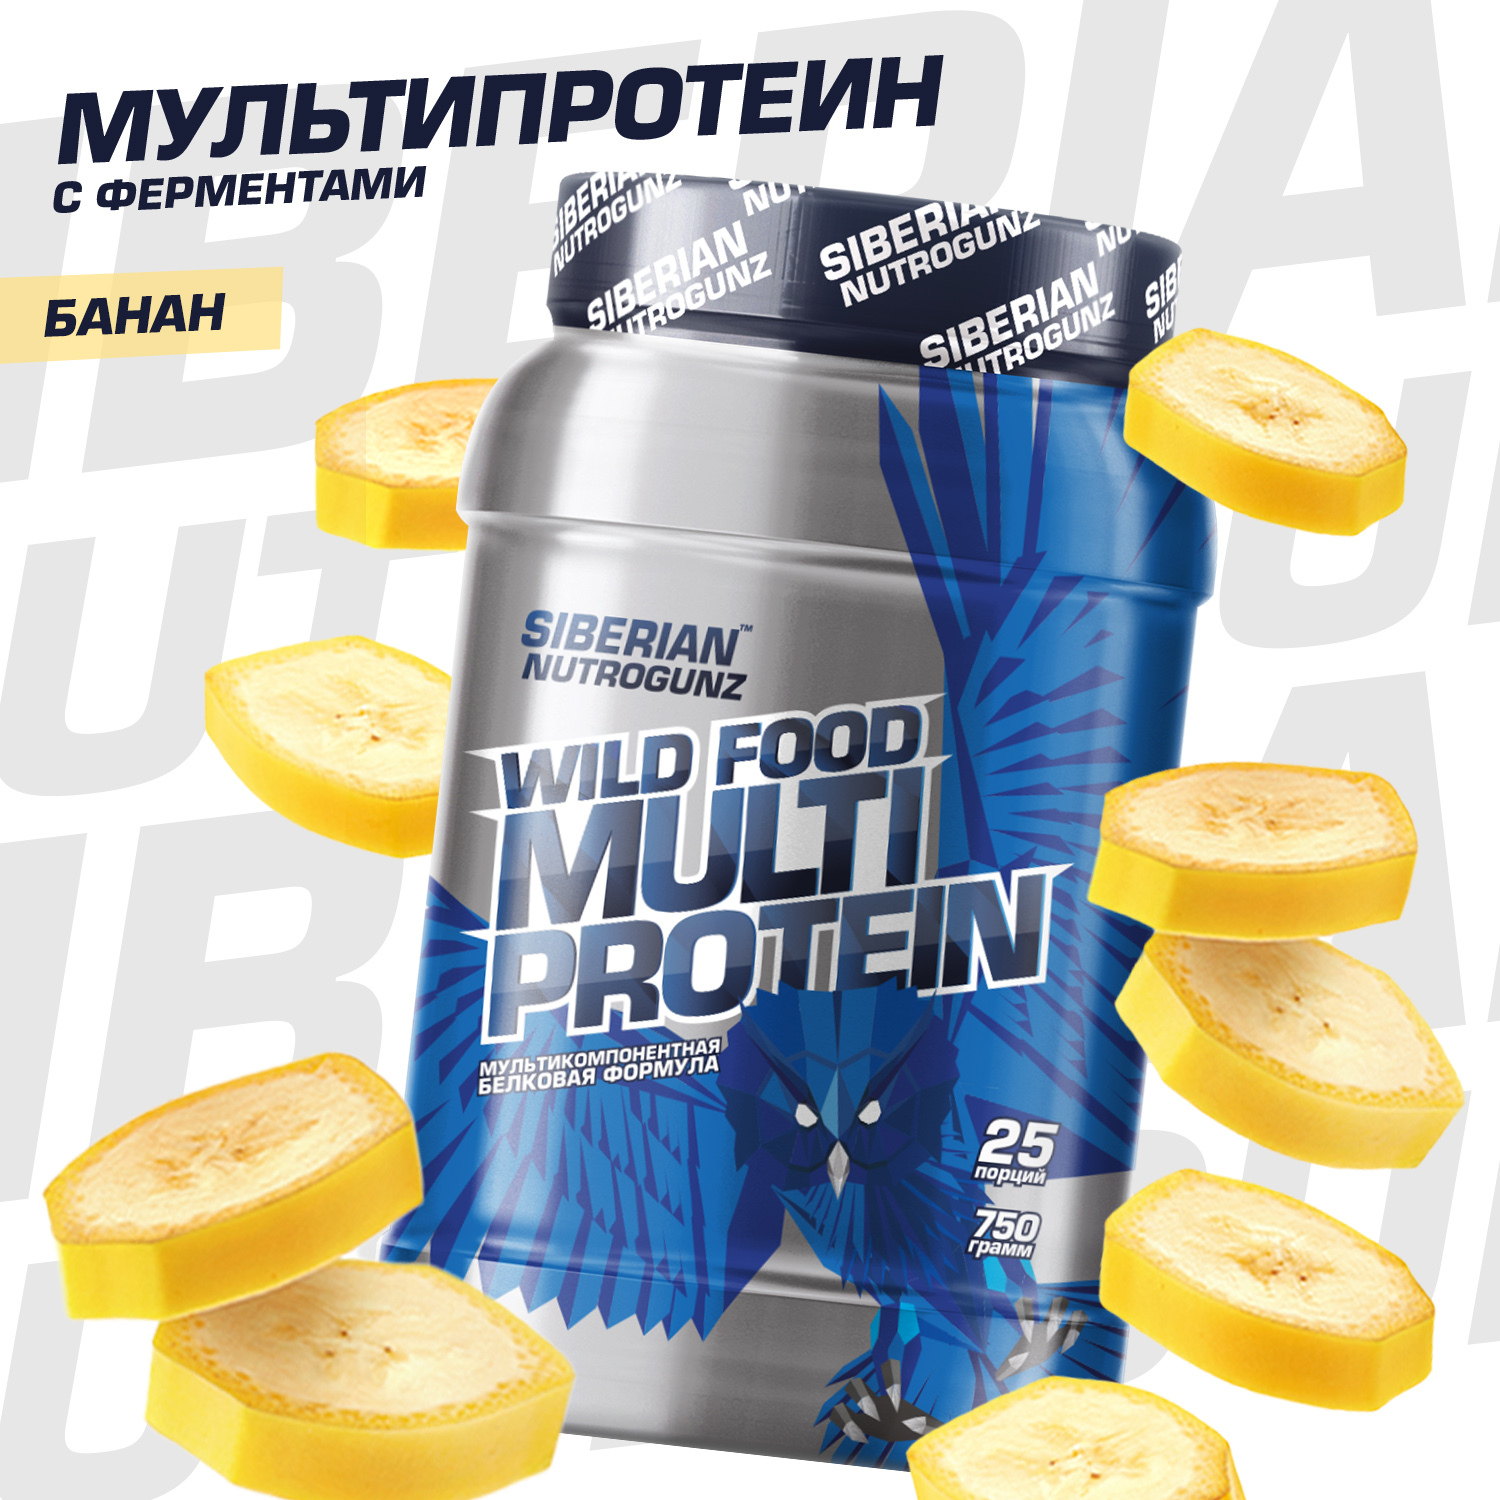 Протеин с бананом. Siberian Nutrogunz Multi Protein 750г. Siberian Nutrogunz Wild food протеин. Протеин сывороточный Siberian. Протеин банановый Сайбериан.